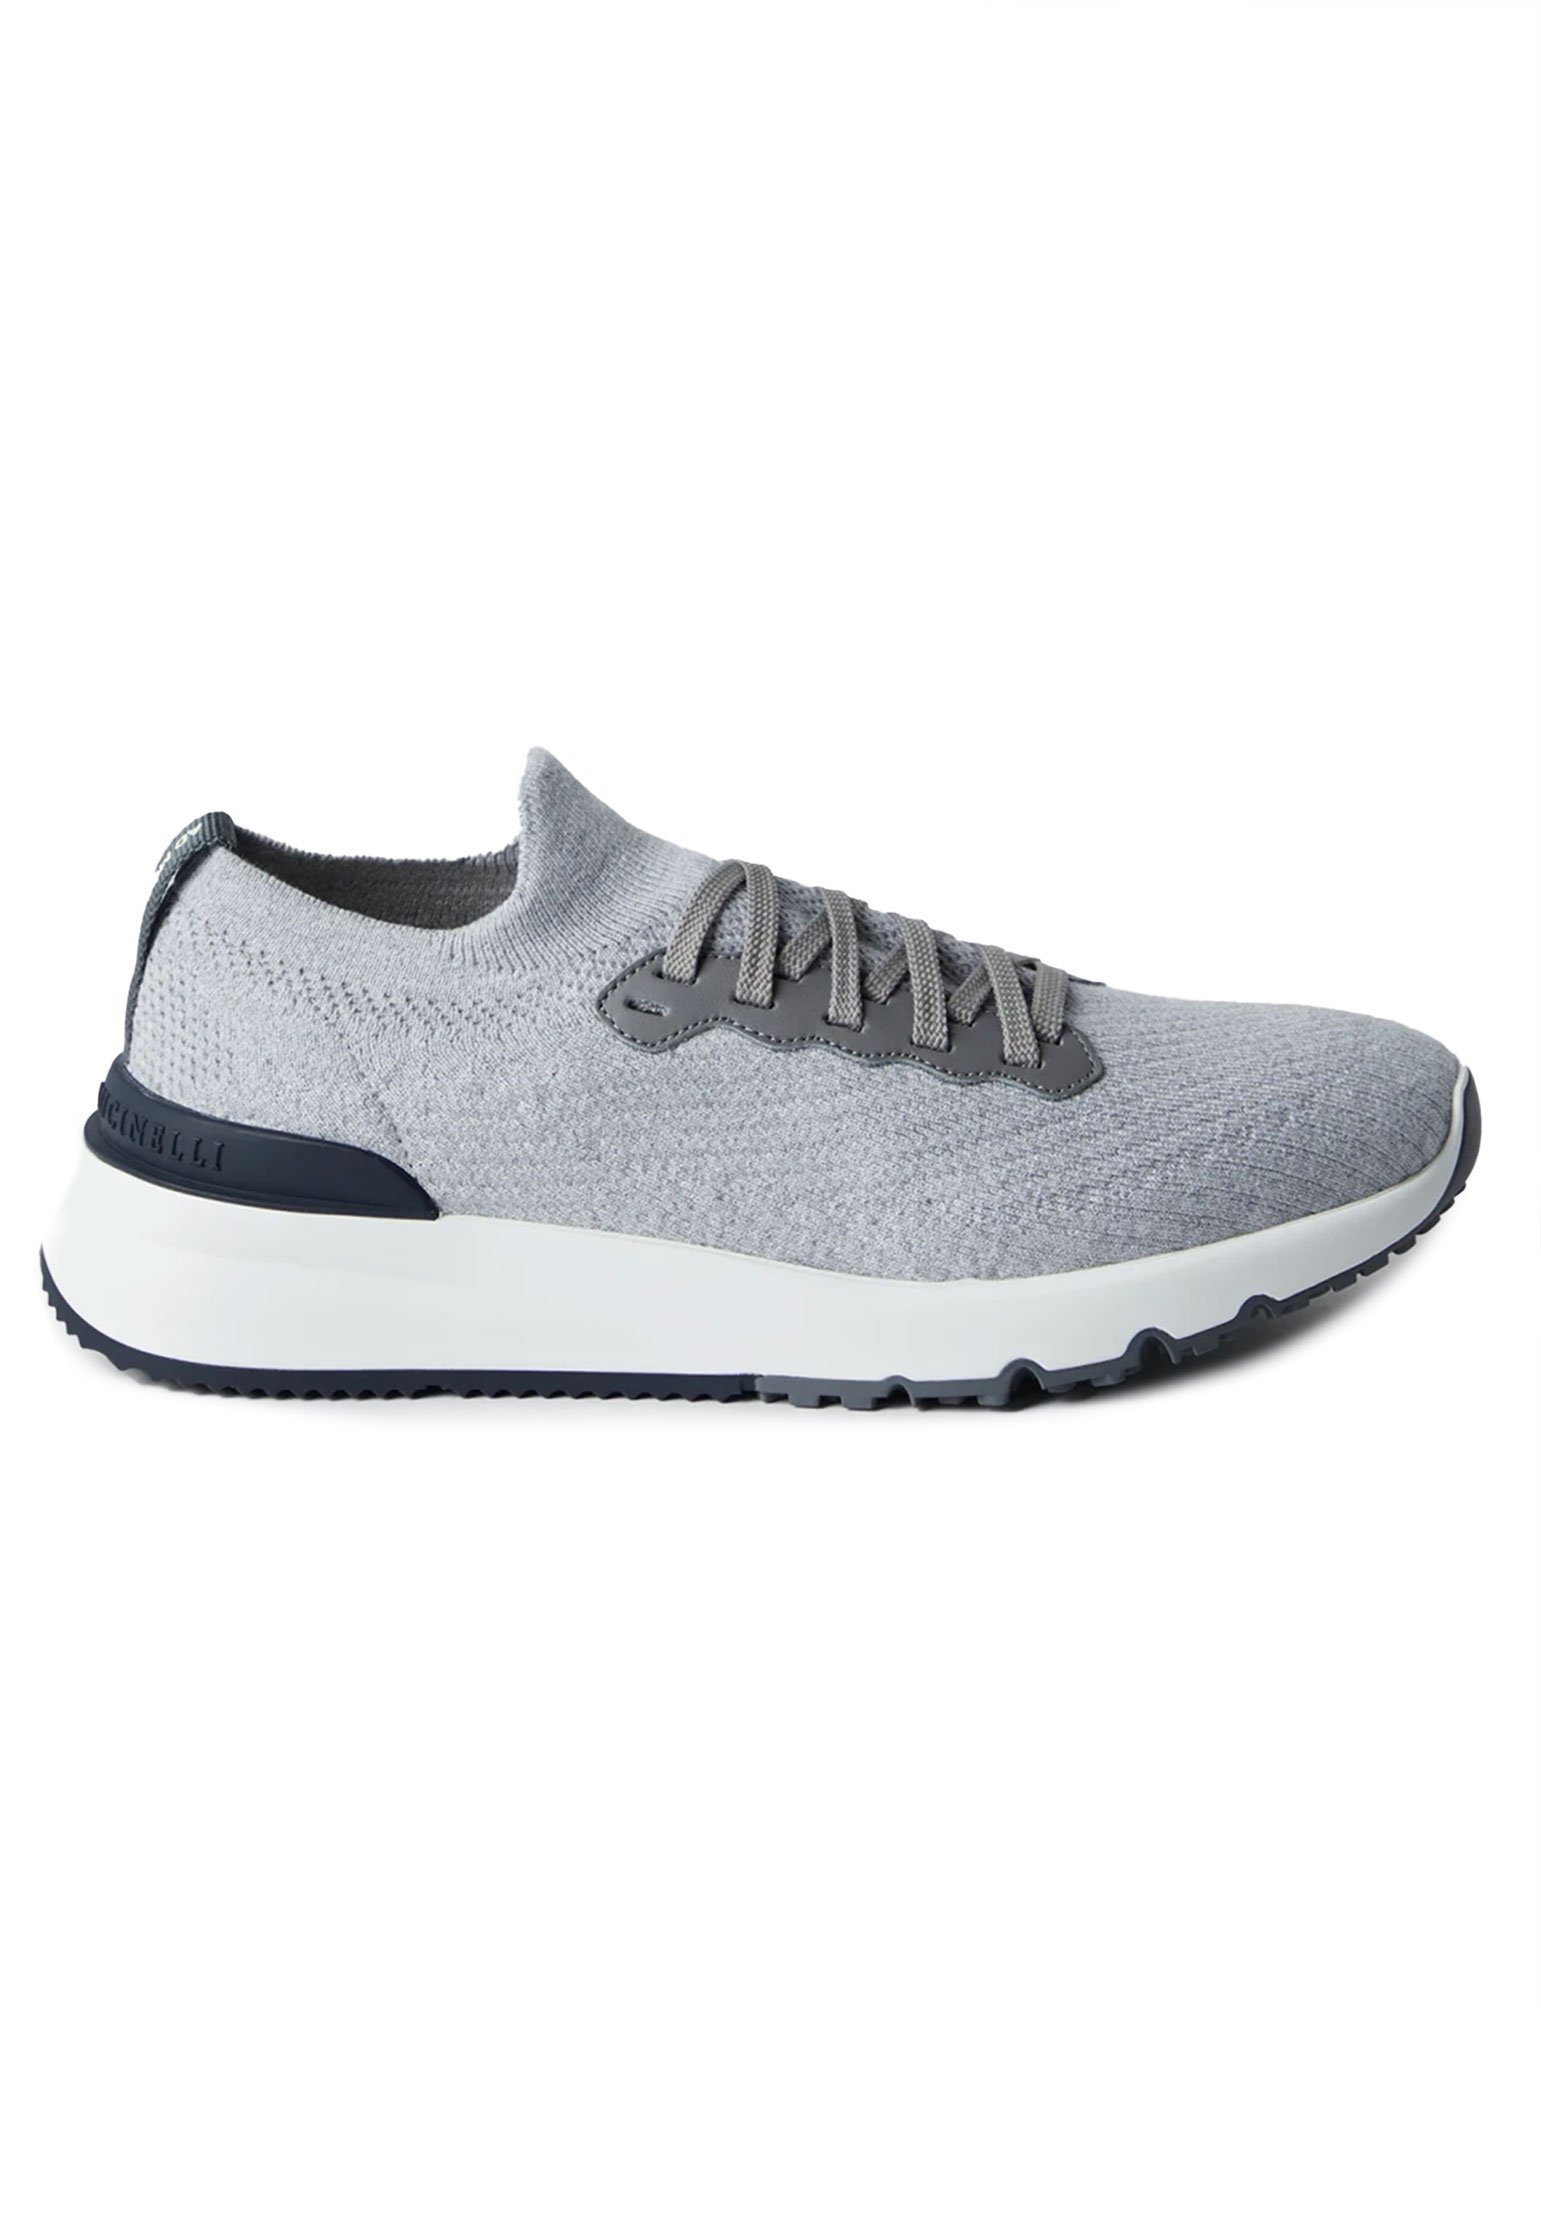 Sneakers BRUNELLO CUCINELLI Color: grey (Code: 3488) in online store Allure